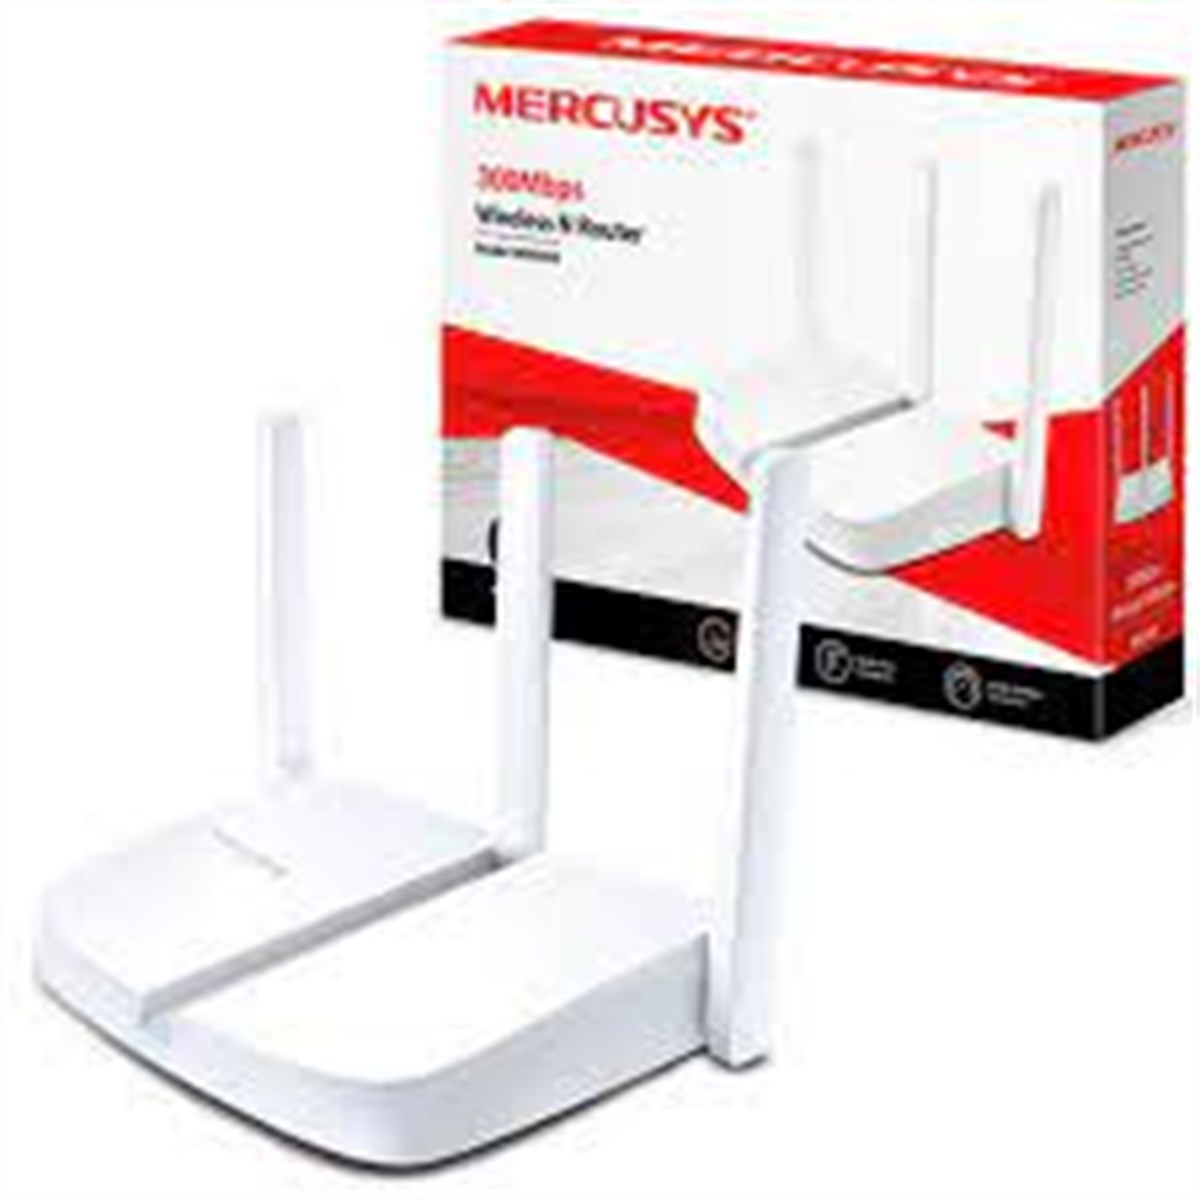 Mercusys mb110 4g. Mercusys mw305r. Роутер Mercusys 300mbps Wireless n. Mercusys mw306r. Wi-Fi роутер Mercusys mw305r, n300.